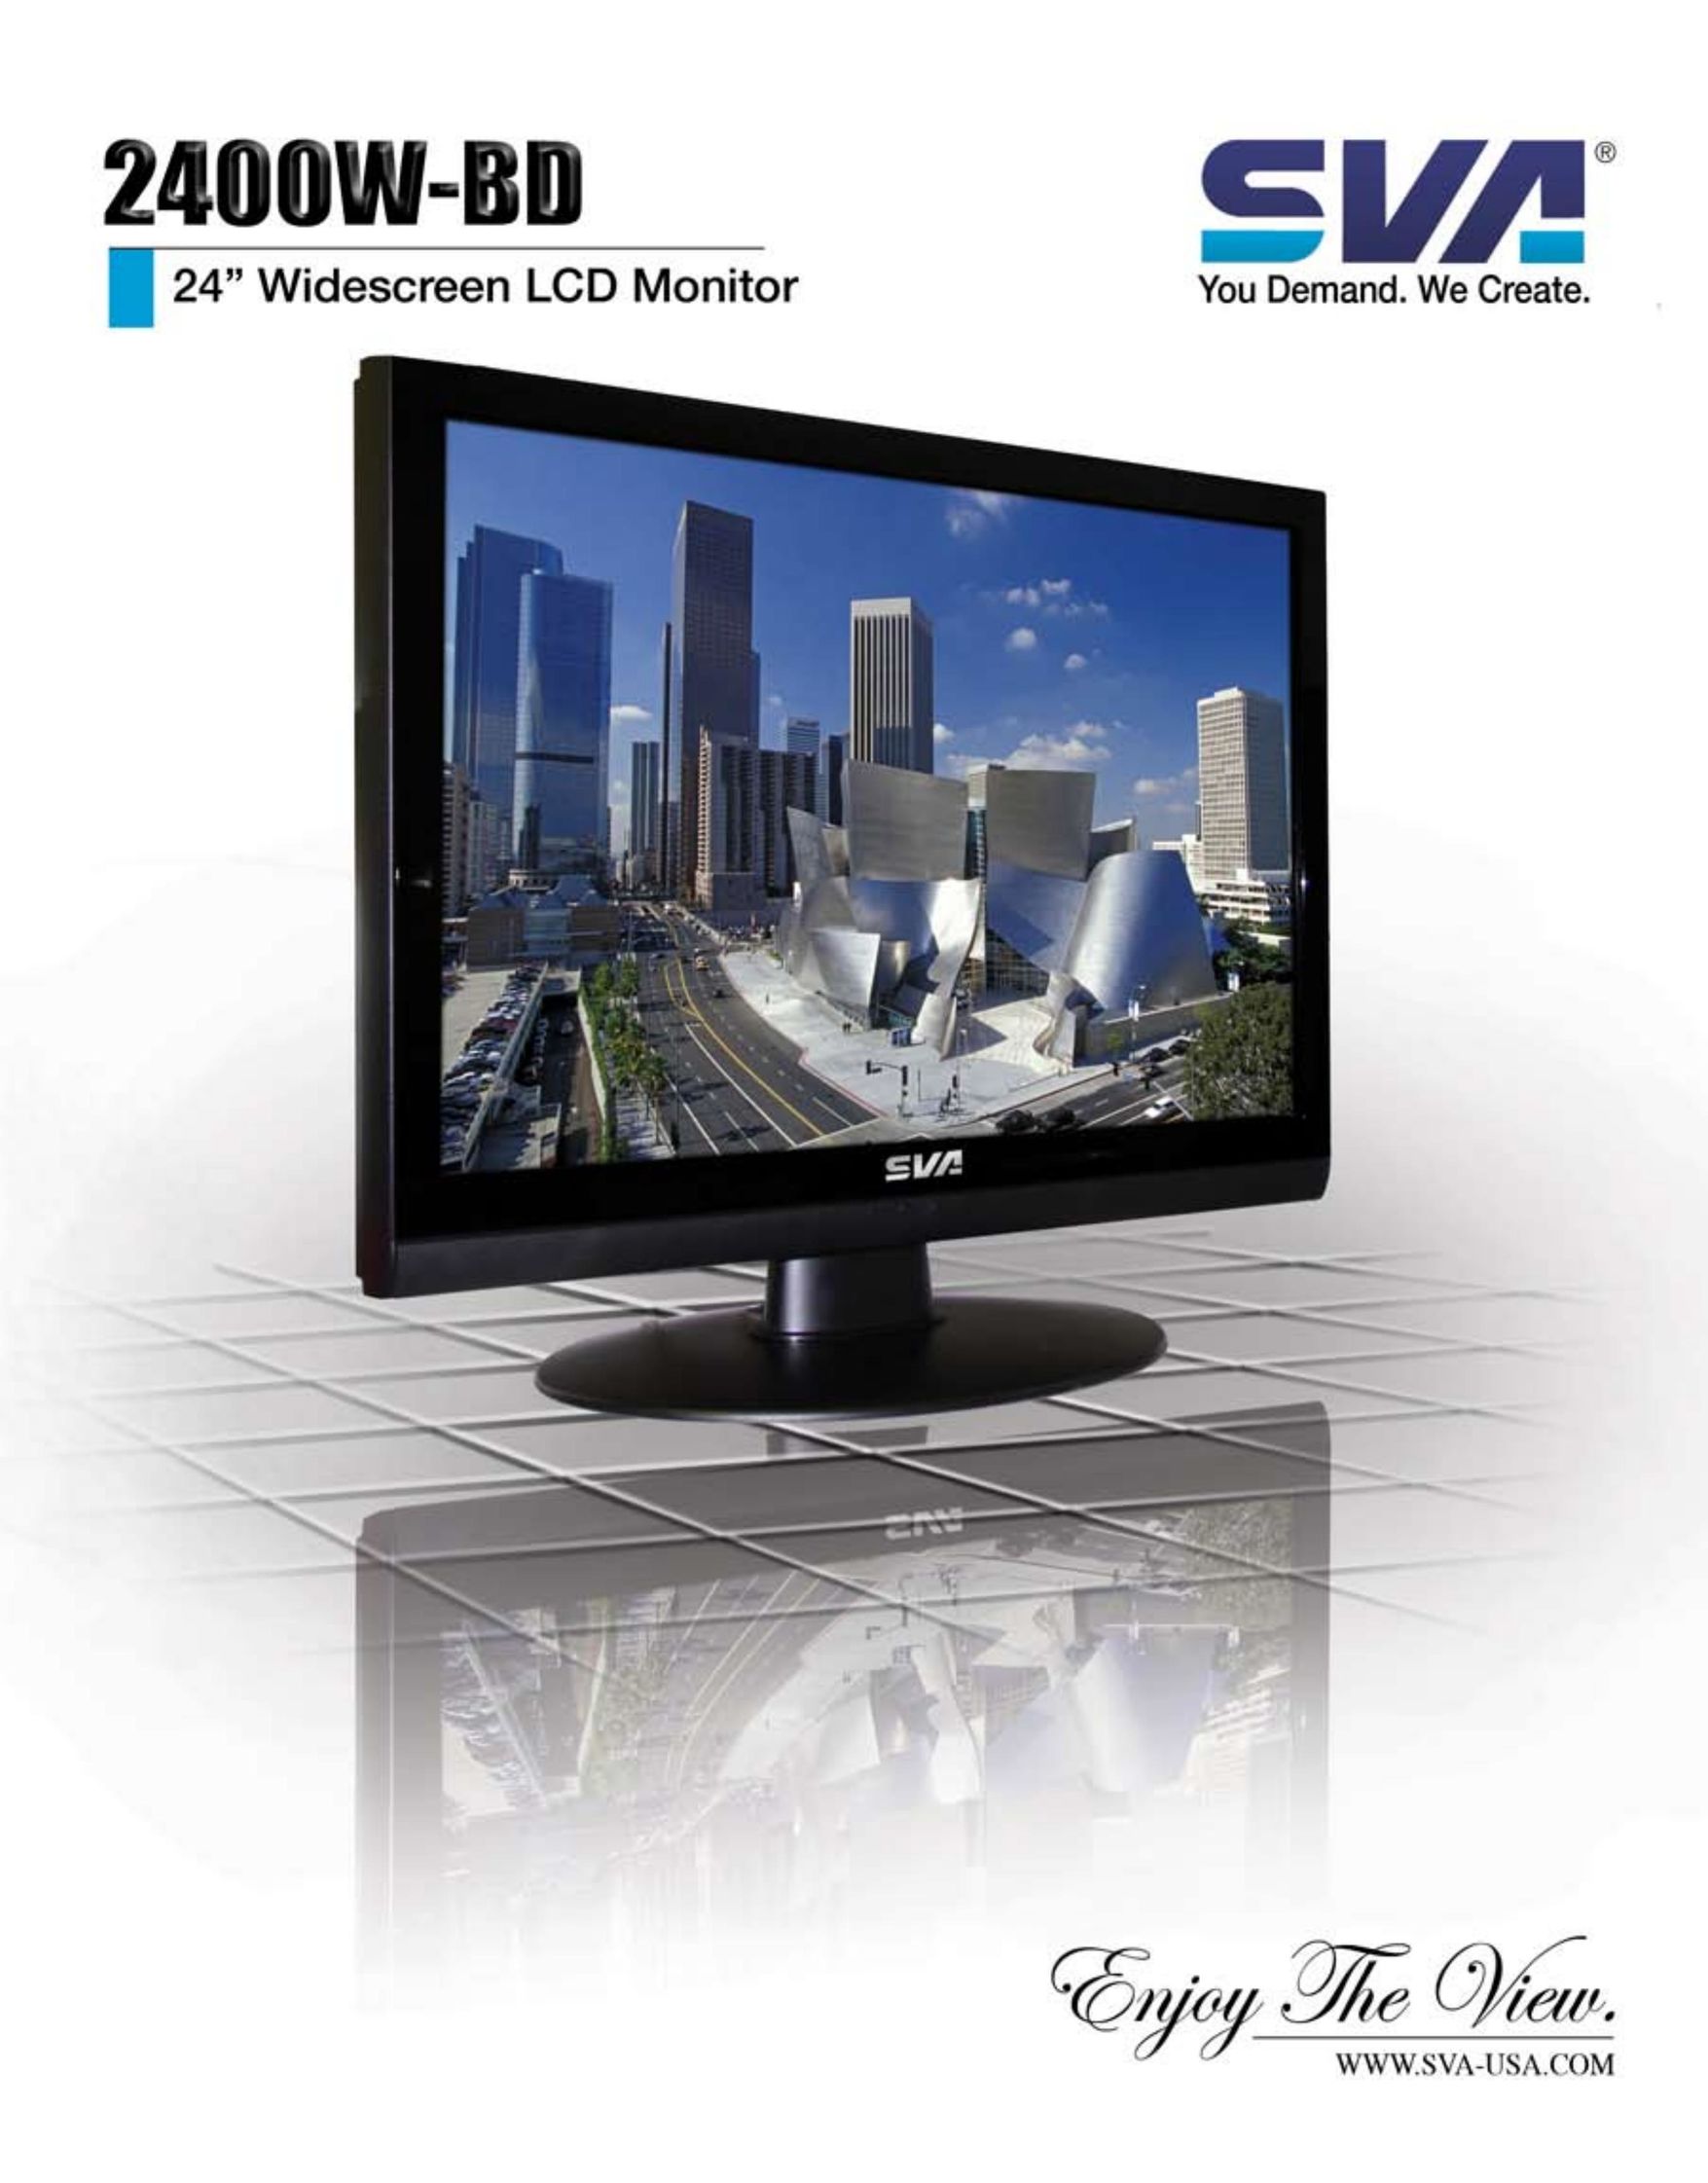 SVA 2400W-BD Computer Monitor User Manual